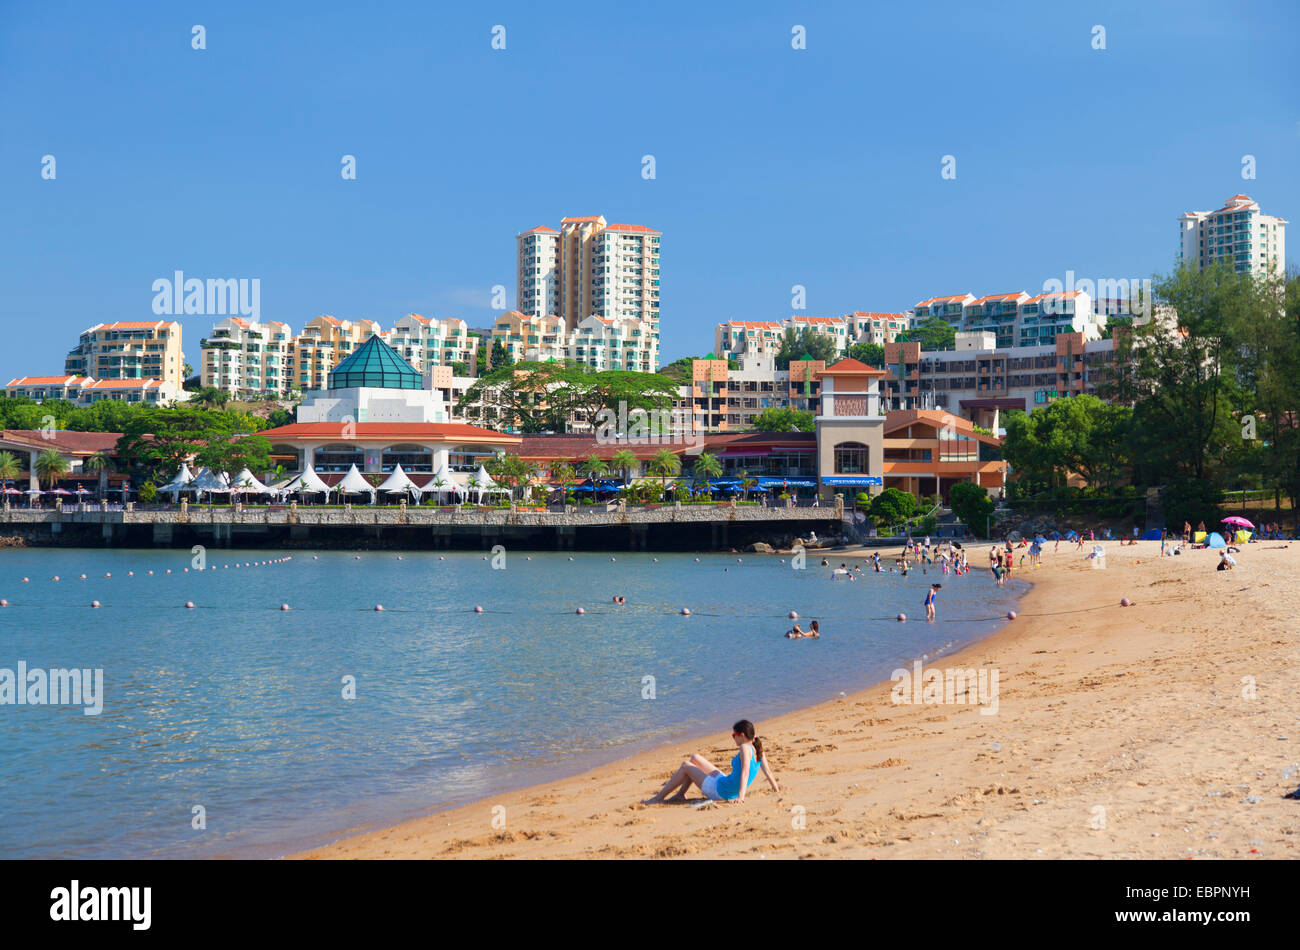 People on beach, Discovery Bay, Lantau, Hong Kong, China, Asia Stock Photo